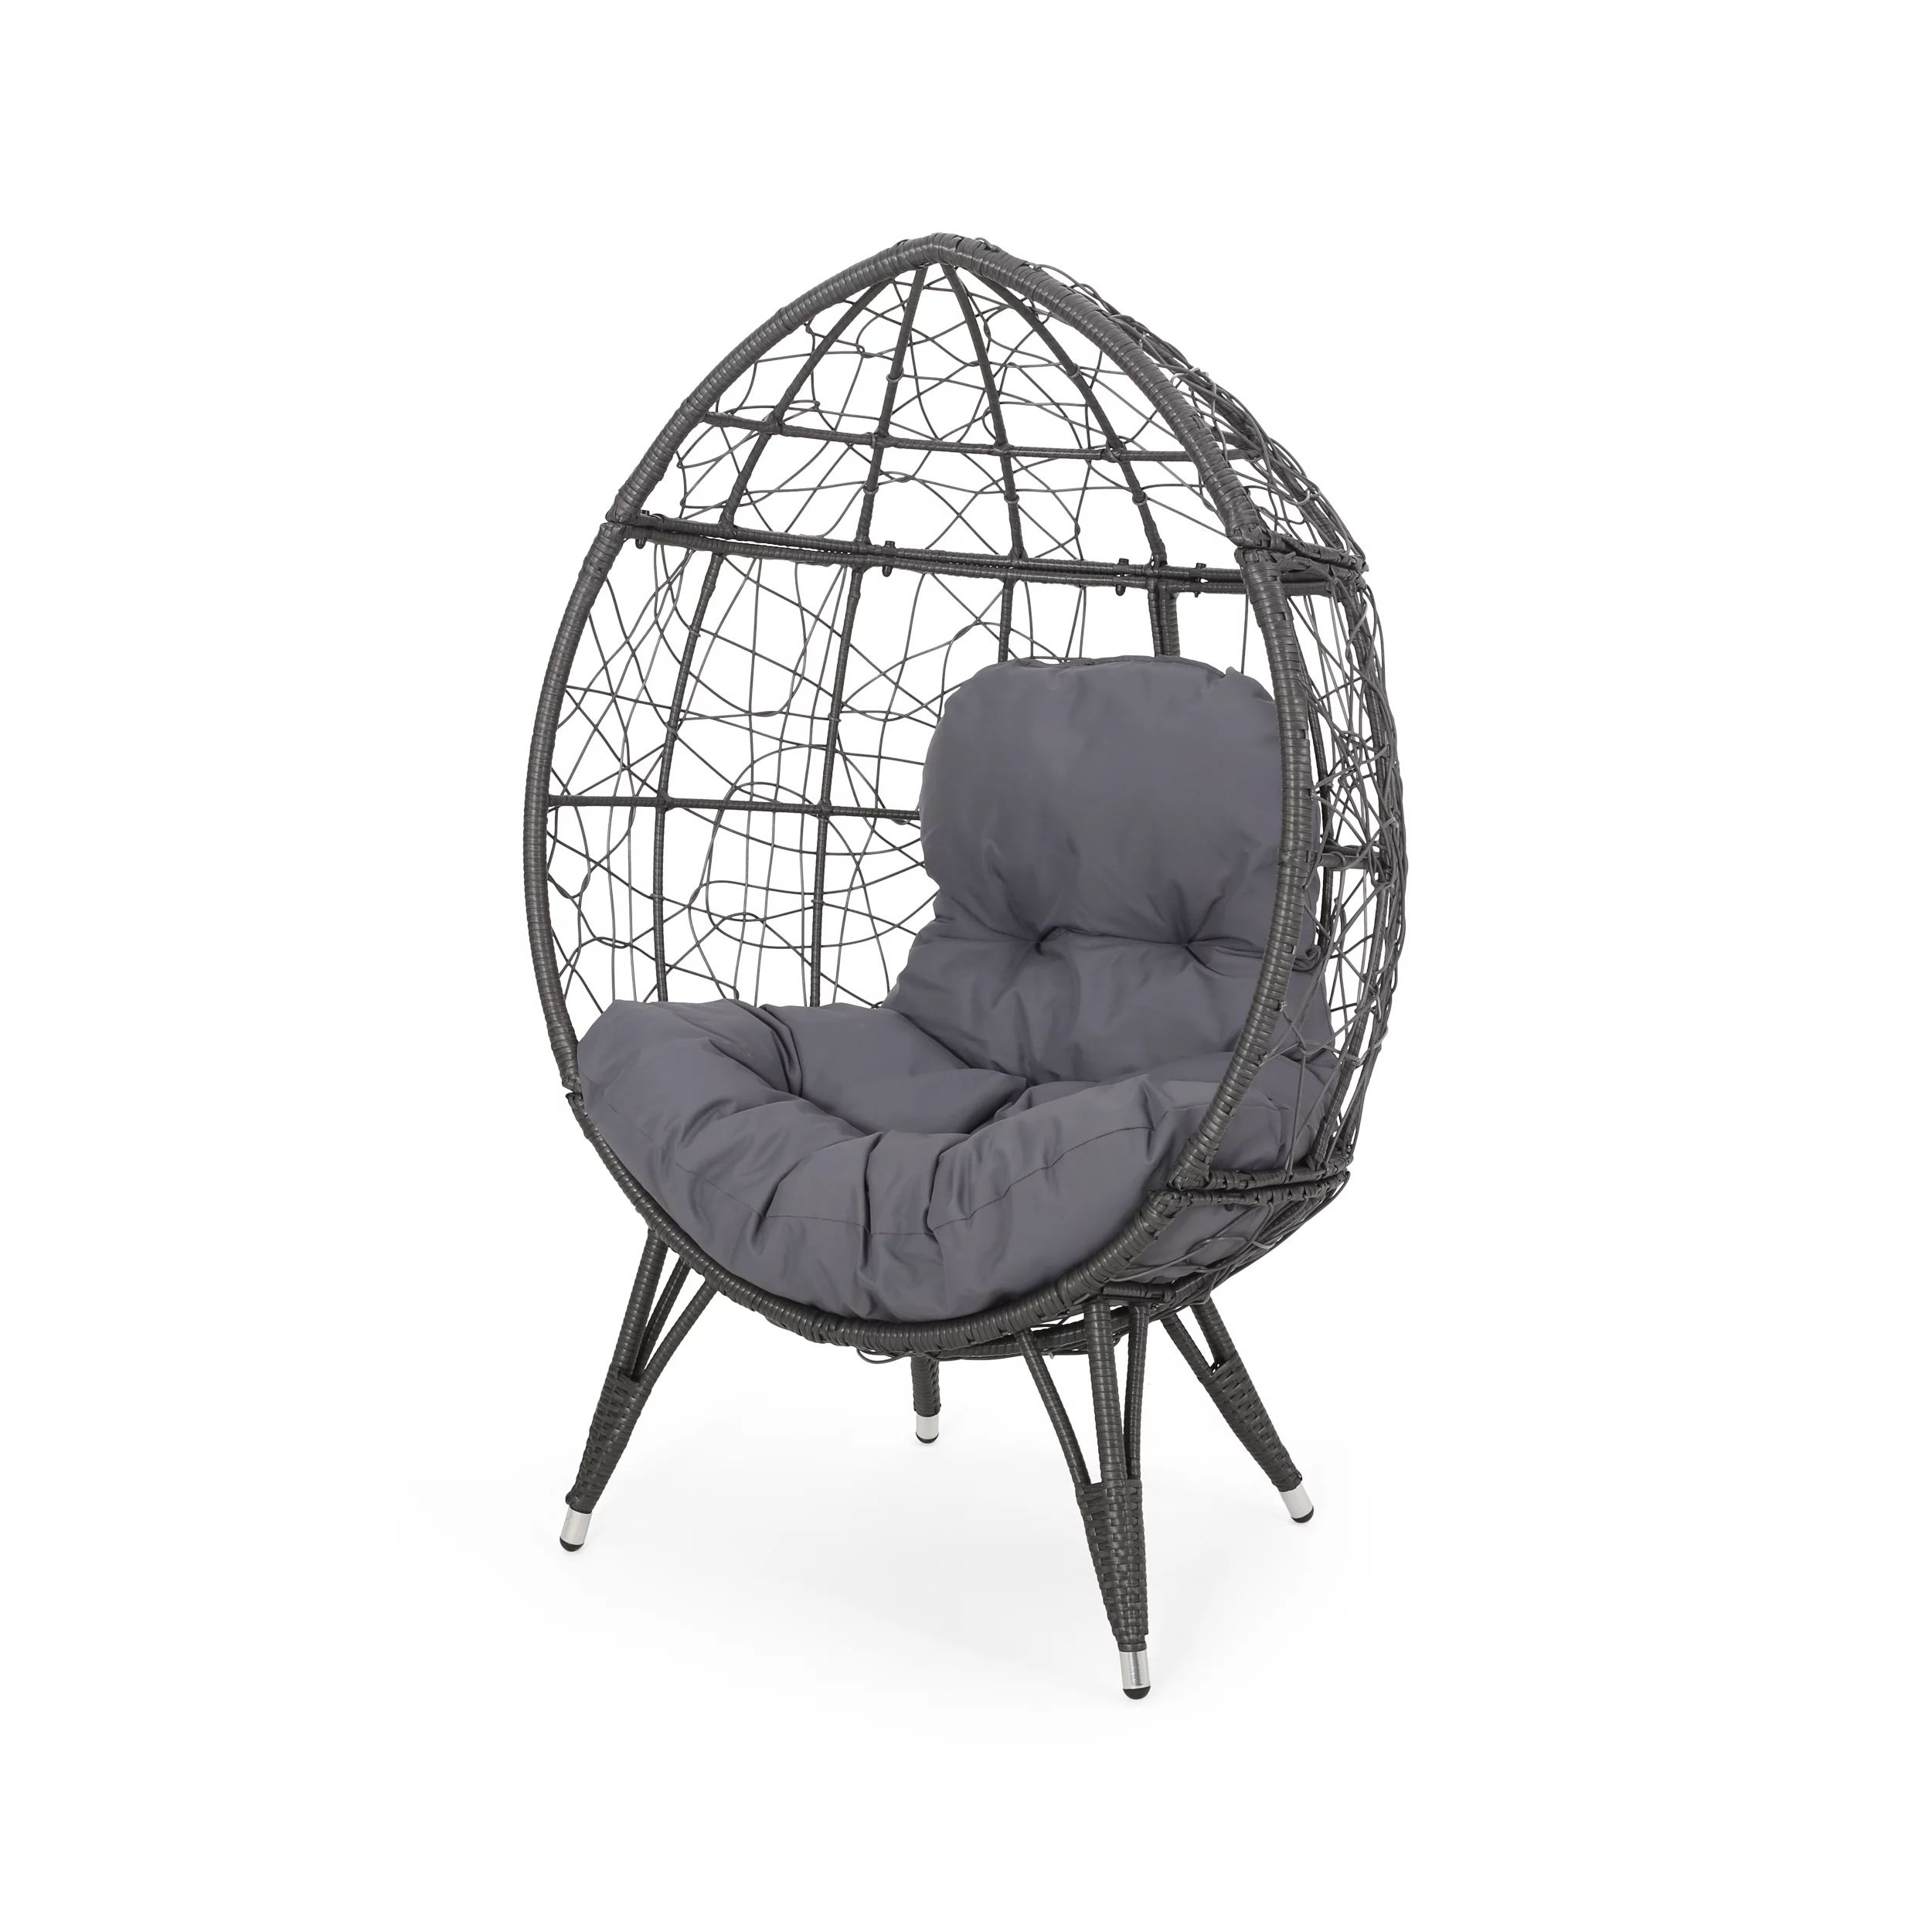 Keondre Indoor Wicker Teardrop Chair with Cushion, Gray and Dark Gray | Walmart (US)